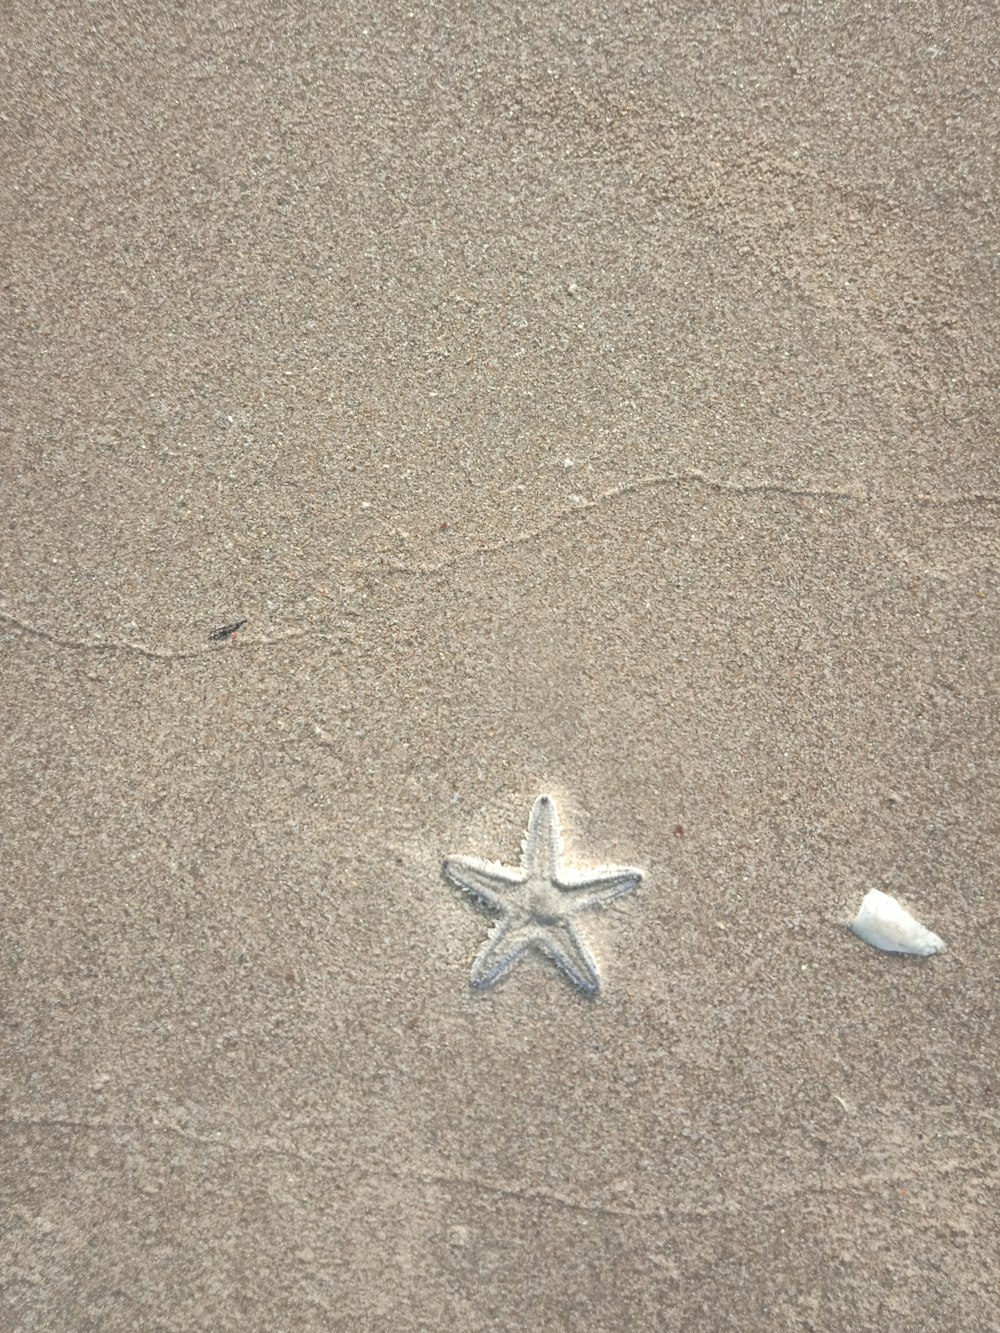 a starfish and a shell on a sandy beach